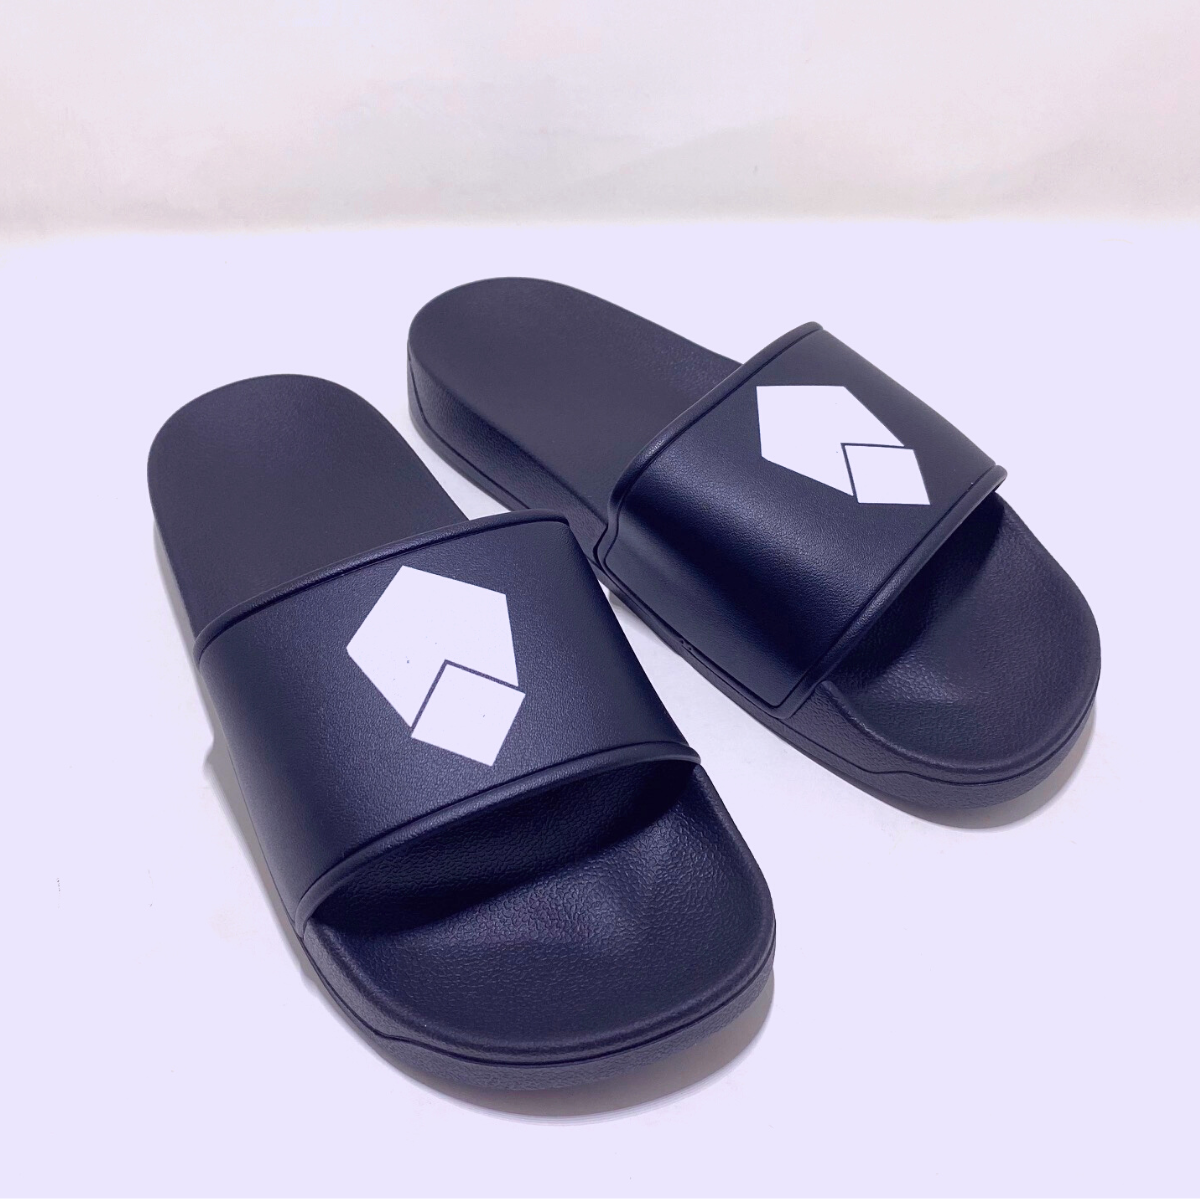 PM Slides - Flip Flops  2 styles